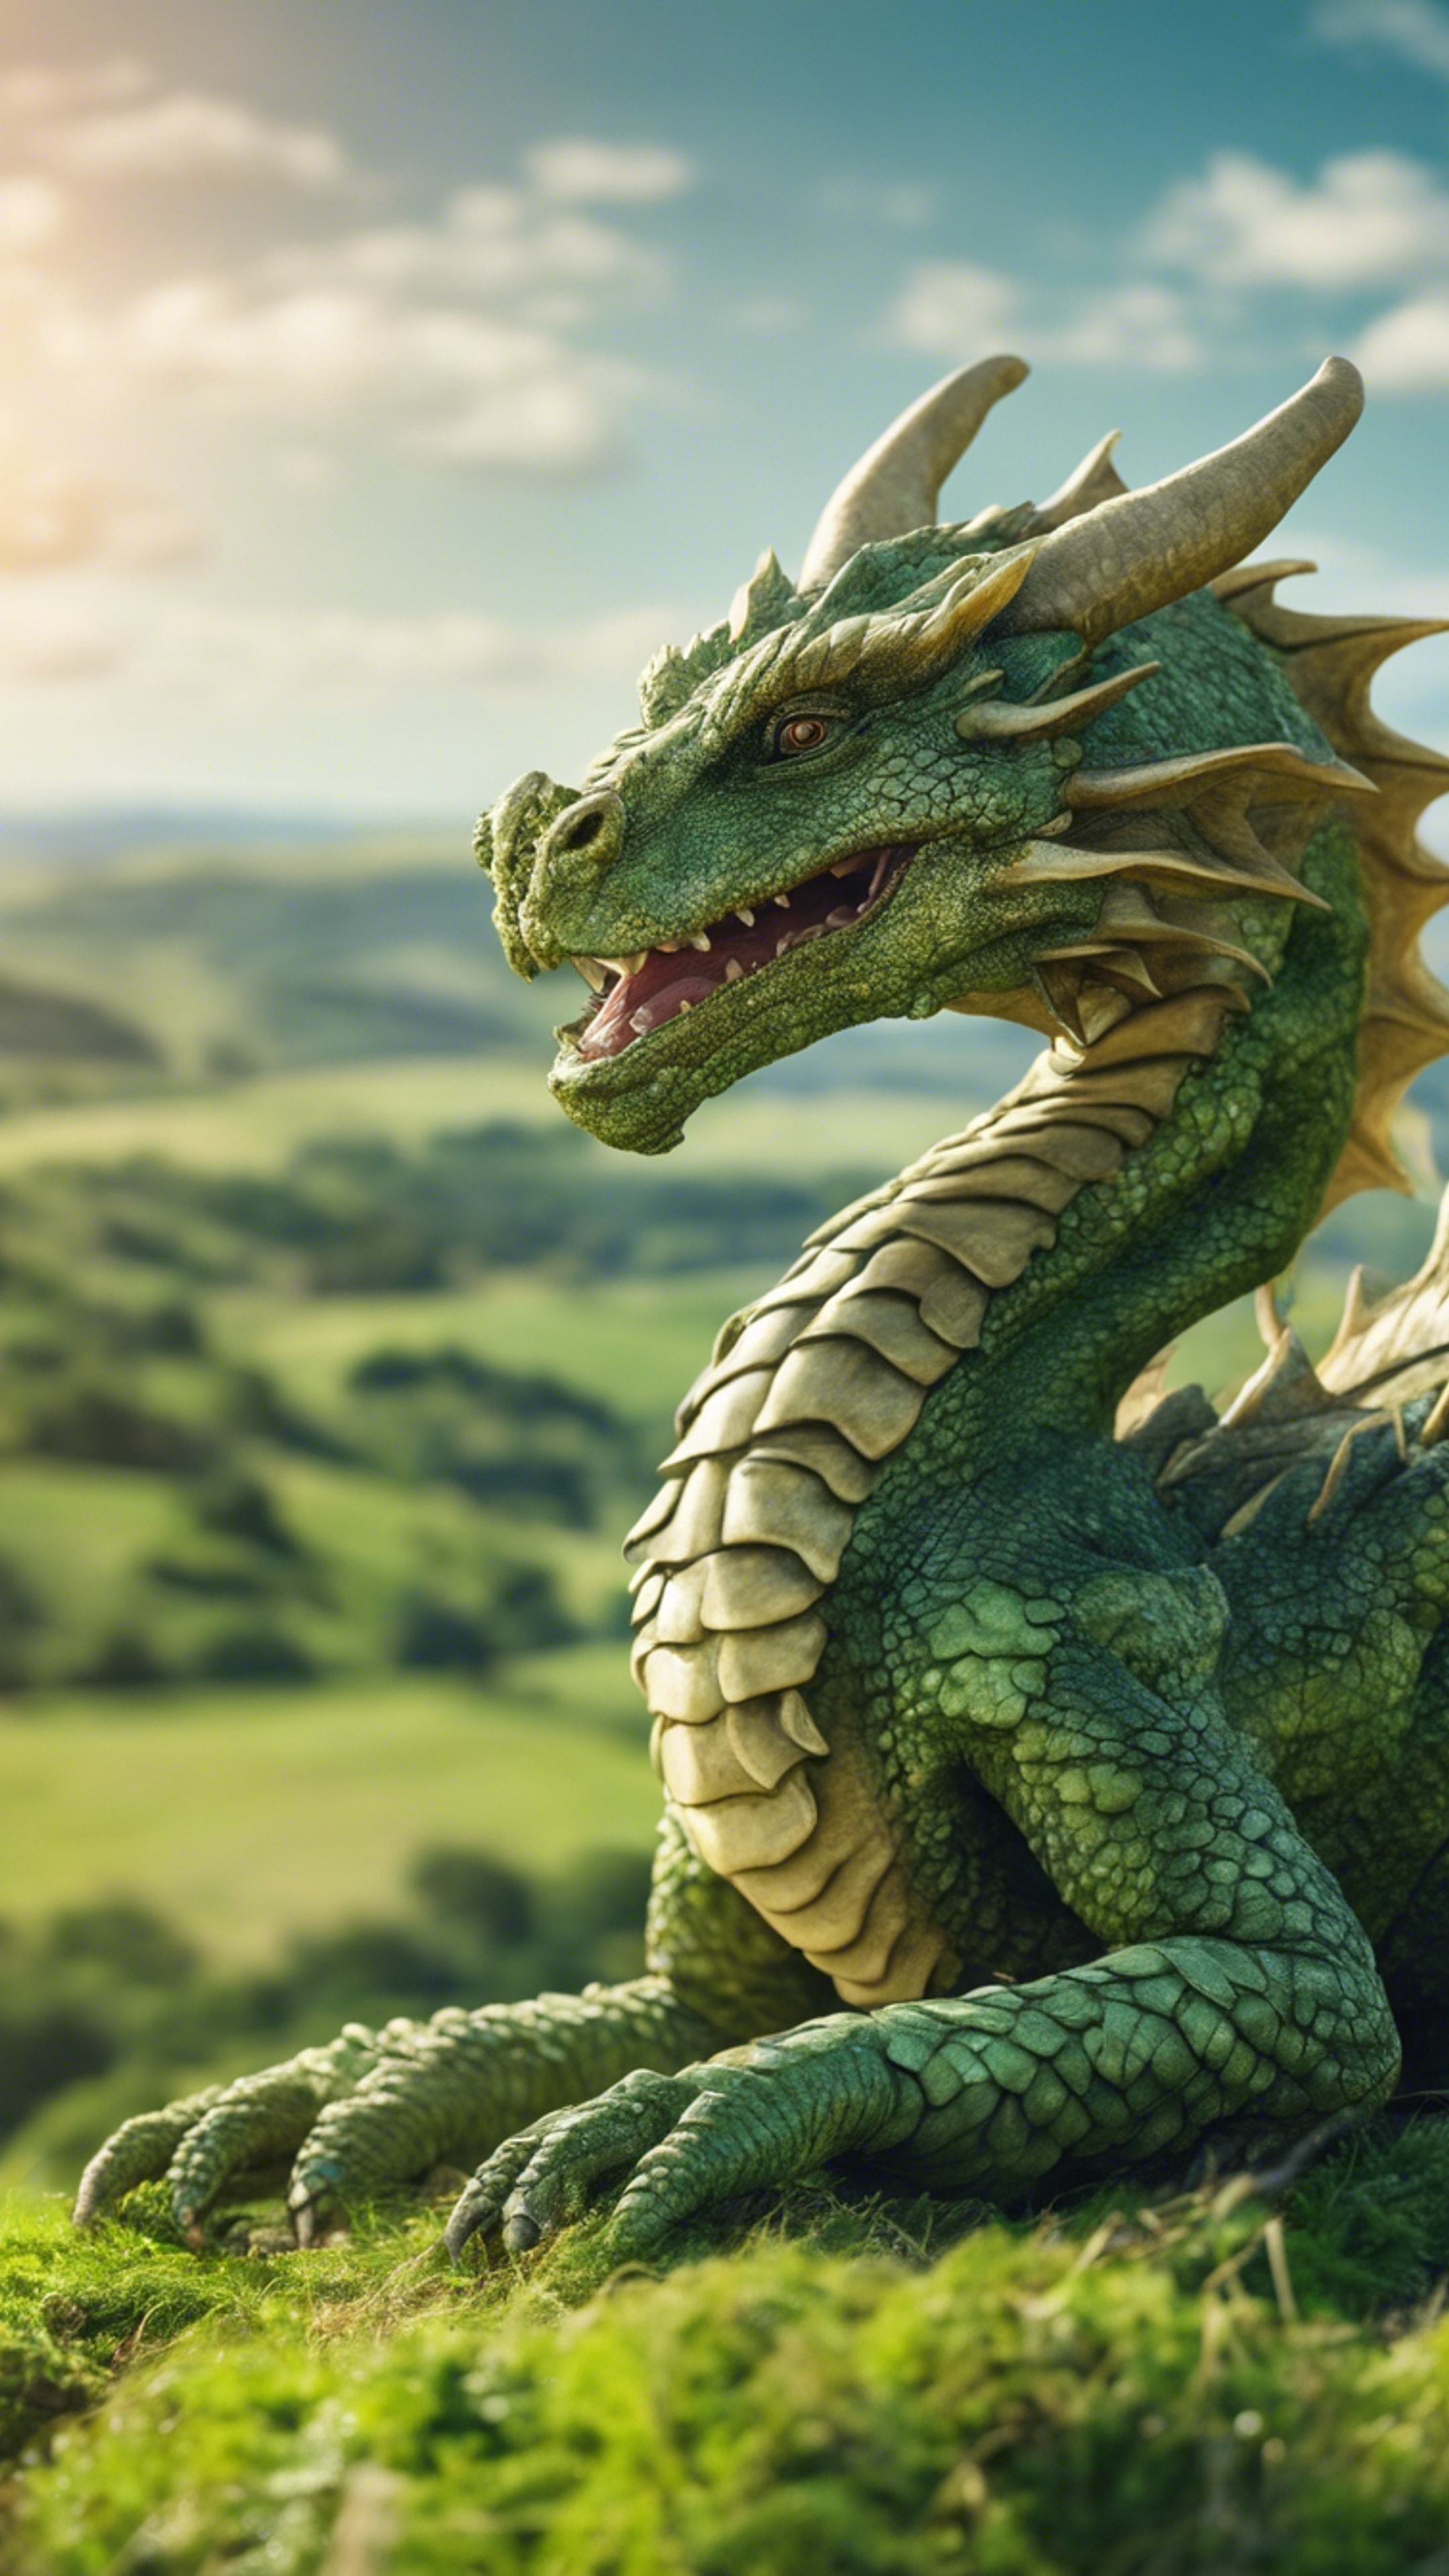 An Earth dragon, resting amidst rolling green hills under a sunny sky.壁紙[ac1302e161bf45a2ada1]